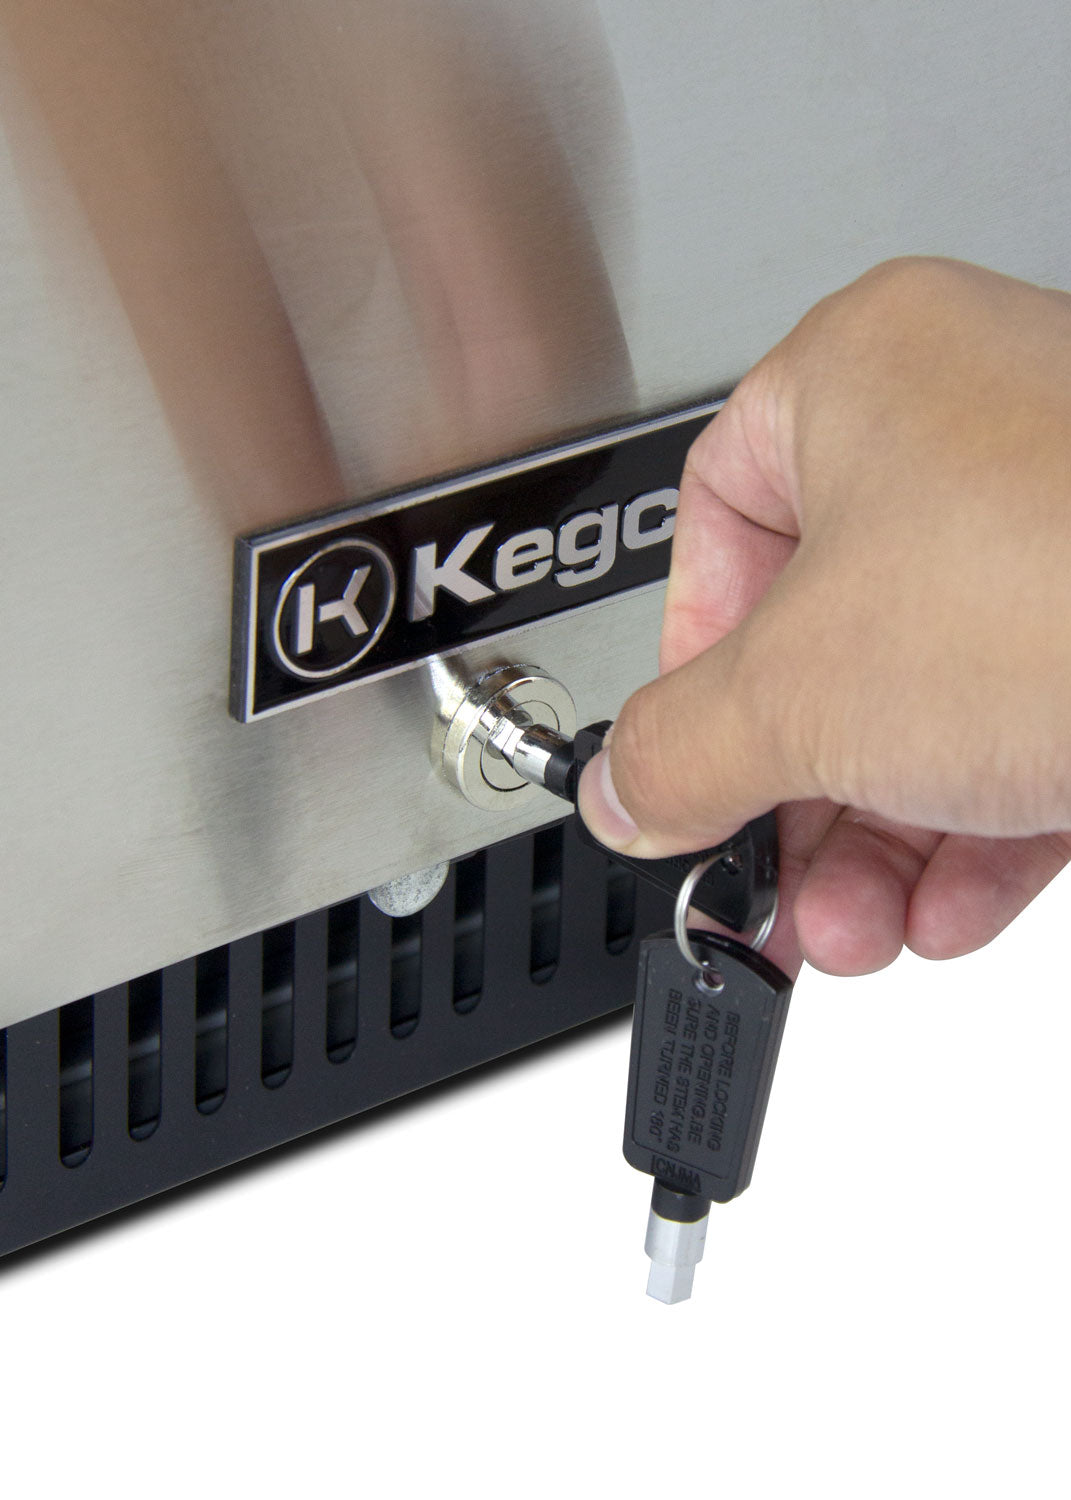 Kegco 15" Wide Single Tap Stainless Steel Commercial Kegerator